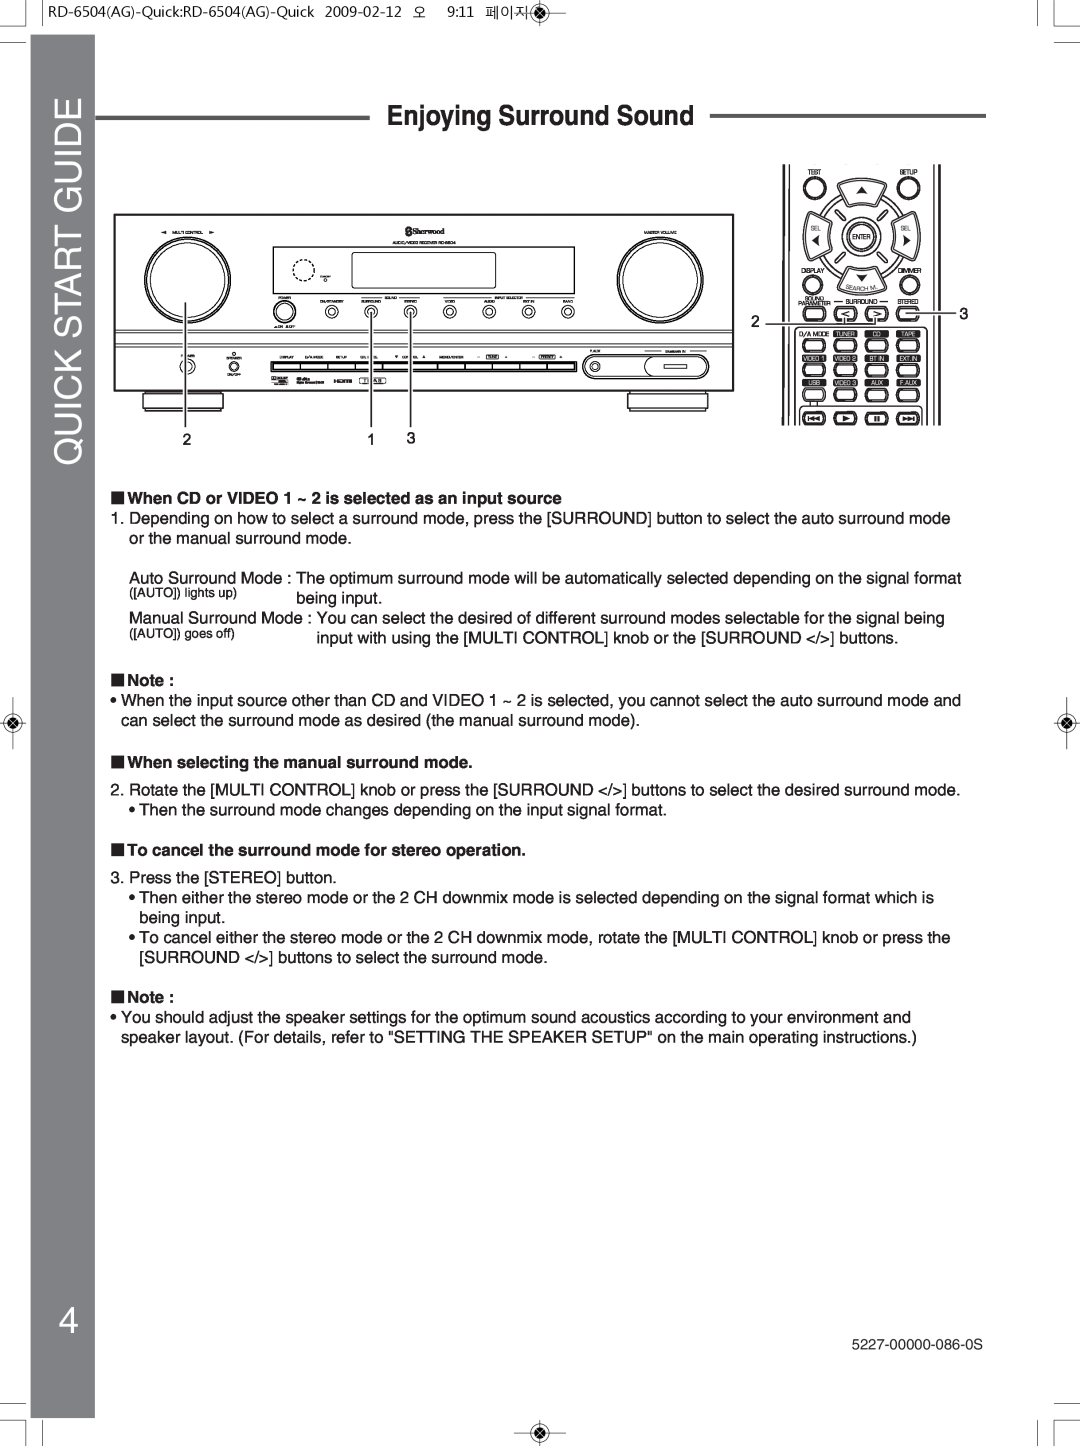 Sherwood 5227-00000-086-0S, RD-6504 Enjoying Surround Sound, Quick Start Guide, When selecting the manual surround mode 